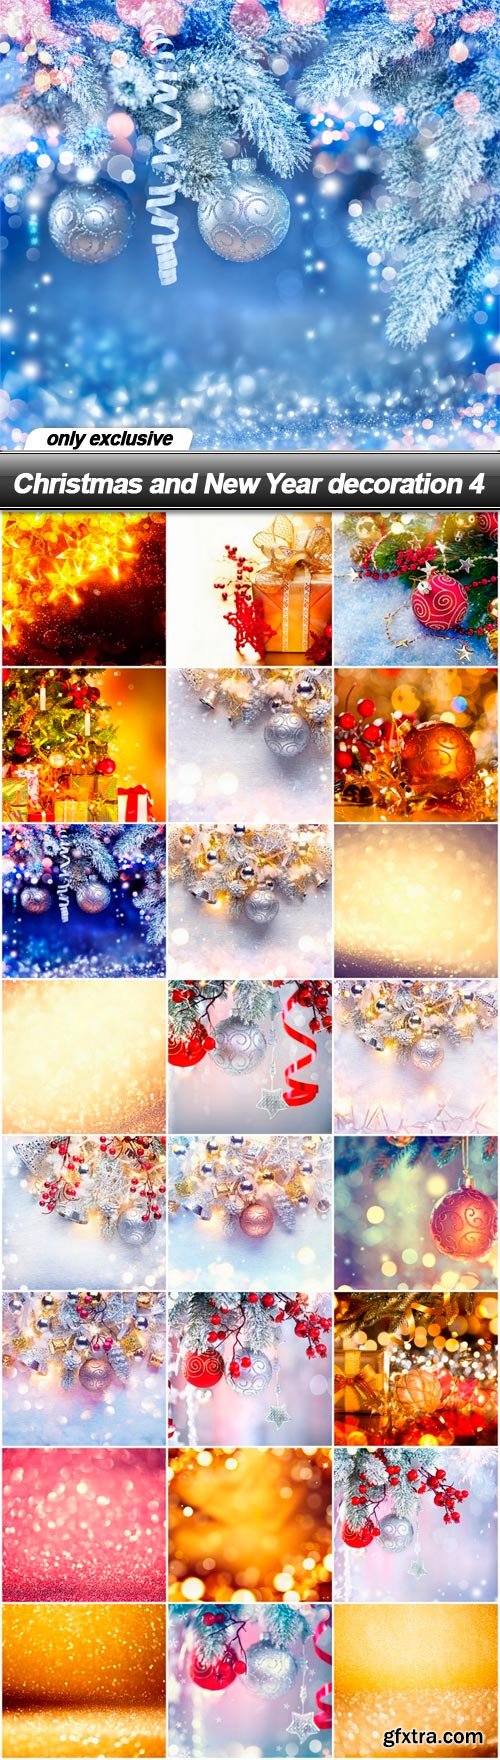 Christmas and New Year decoration 4 - 25 UHQ JPEG